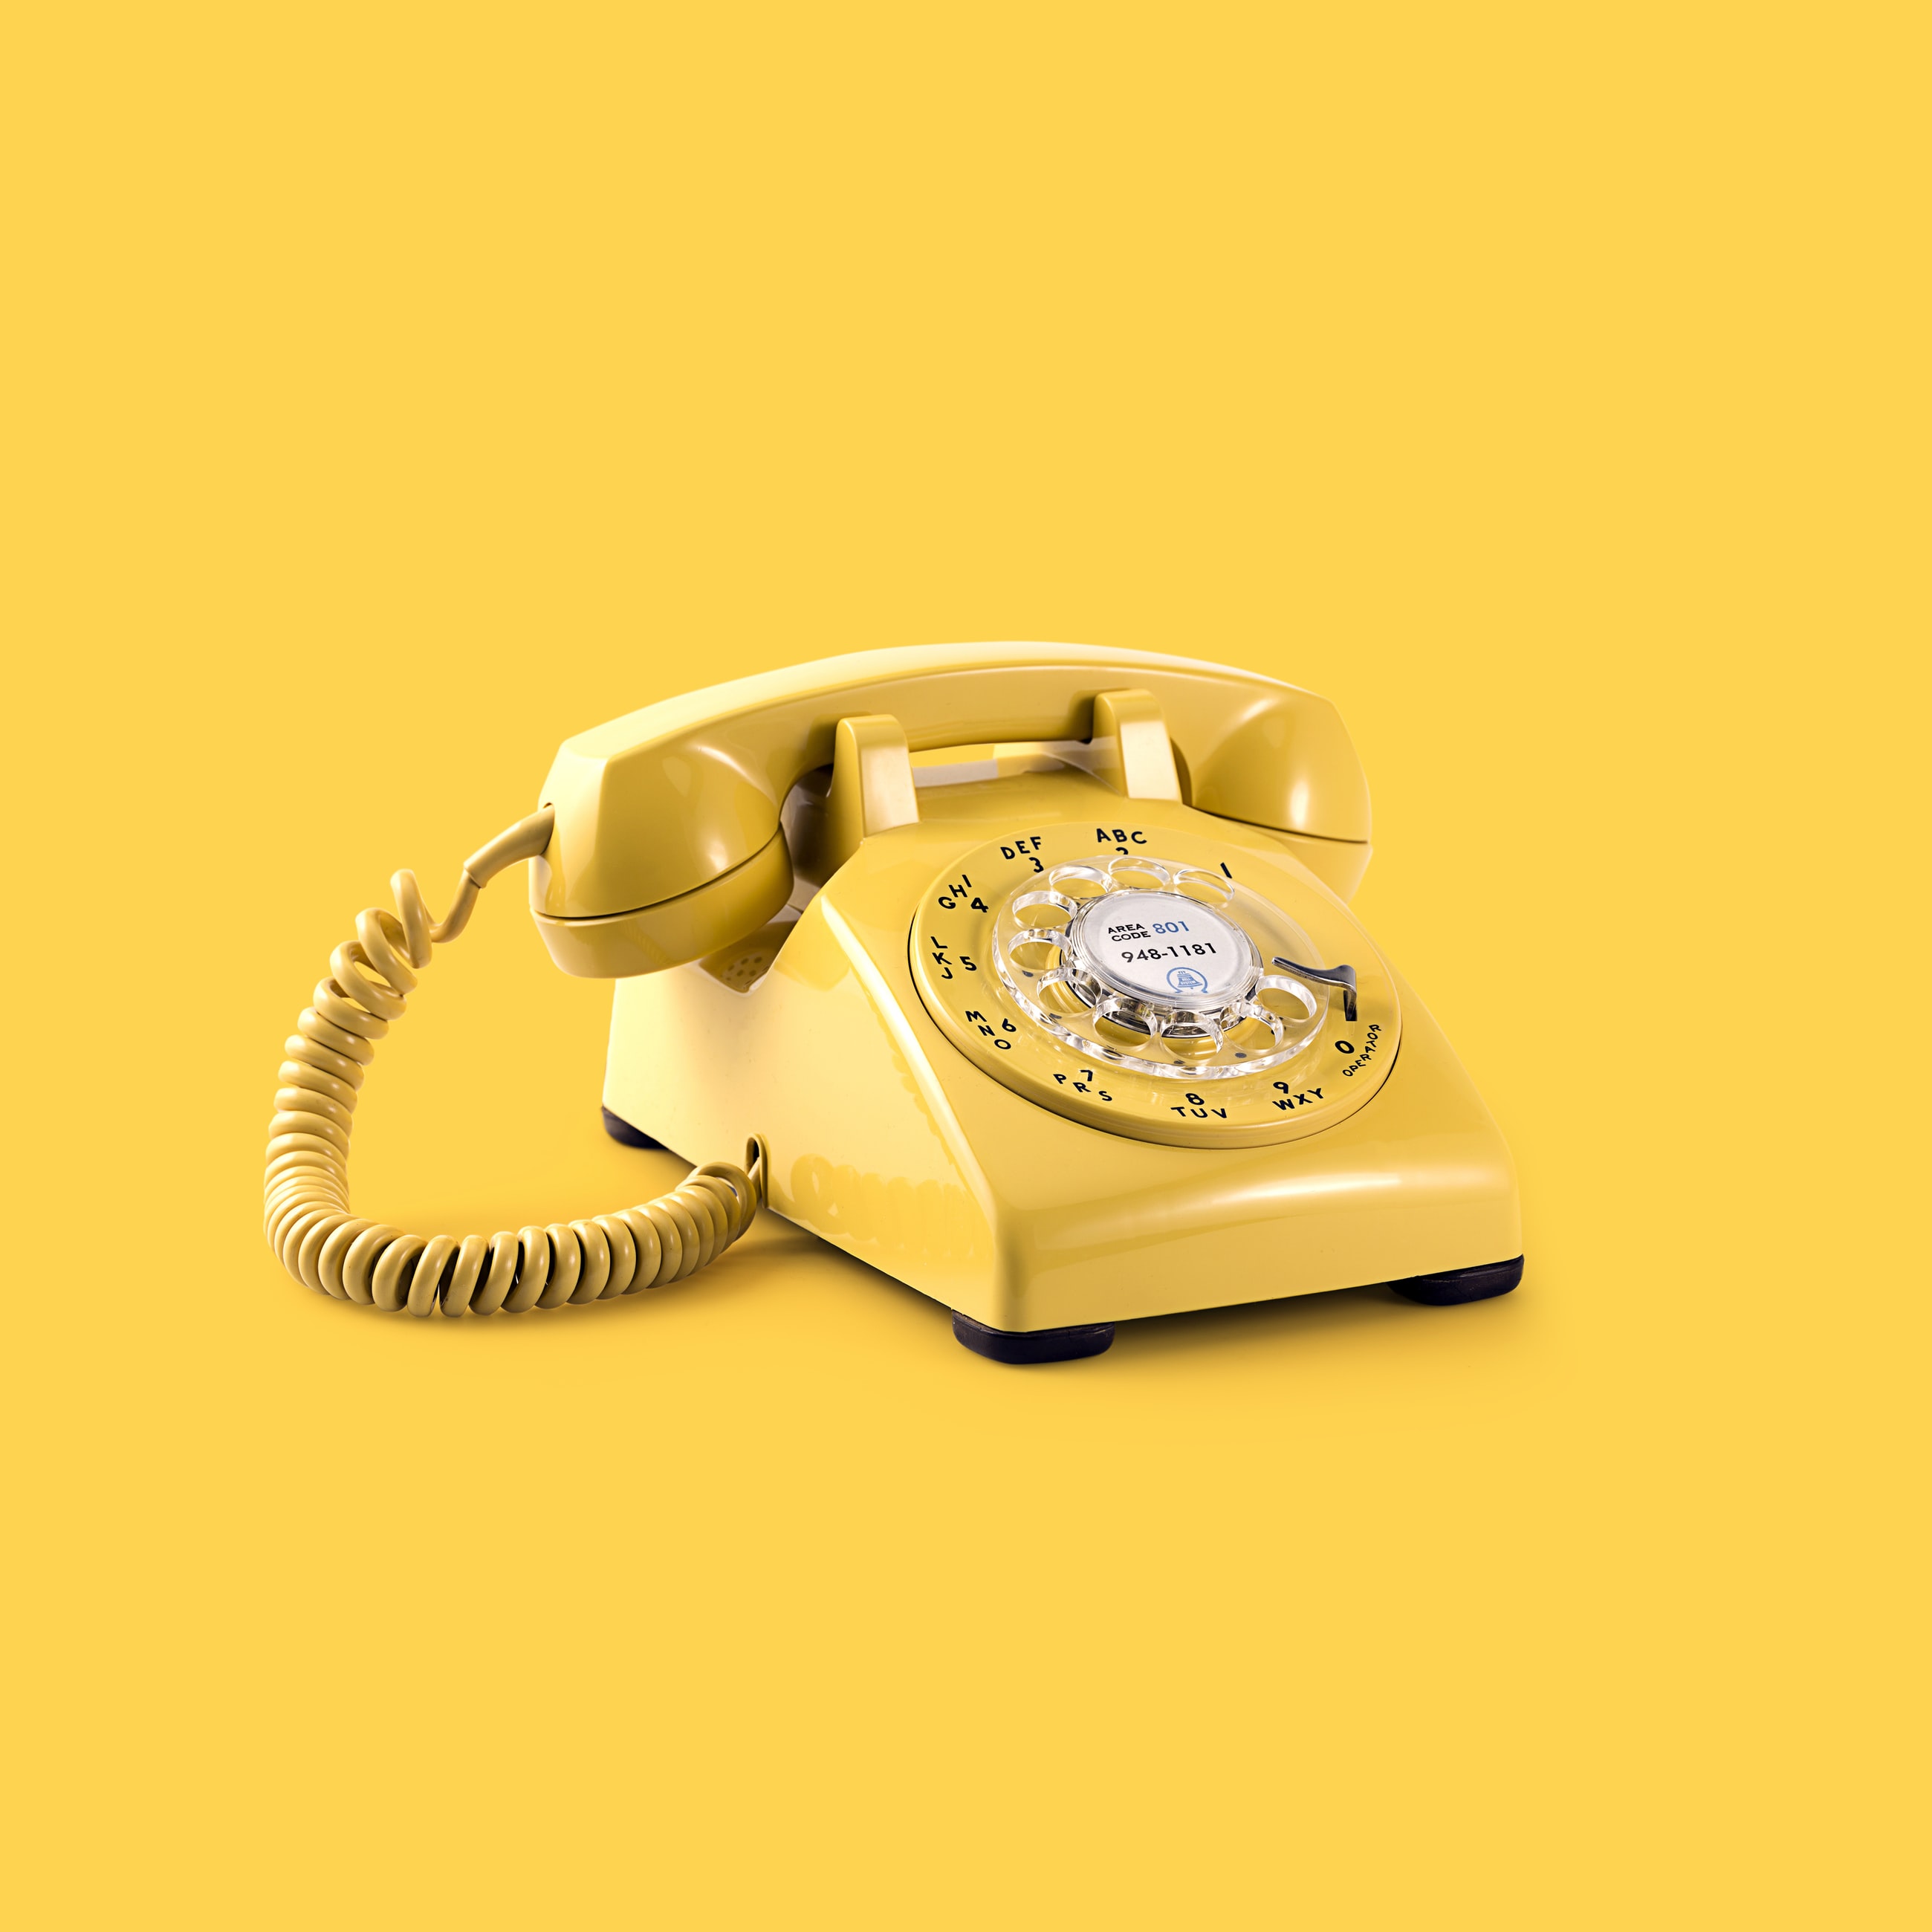 Free Old phone ringtones